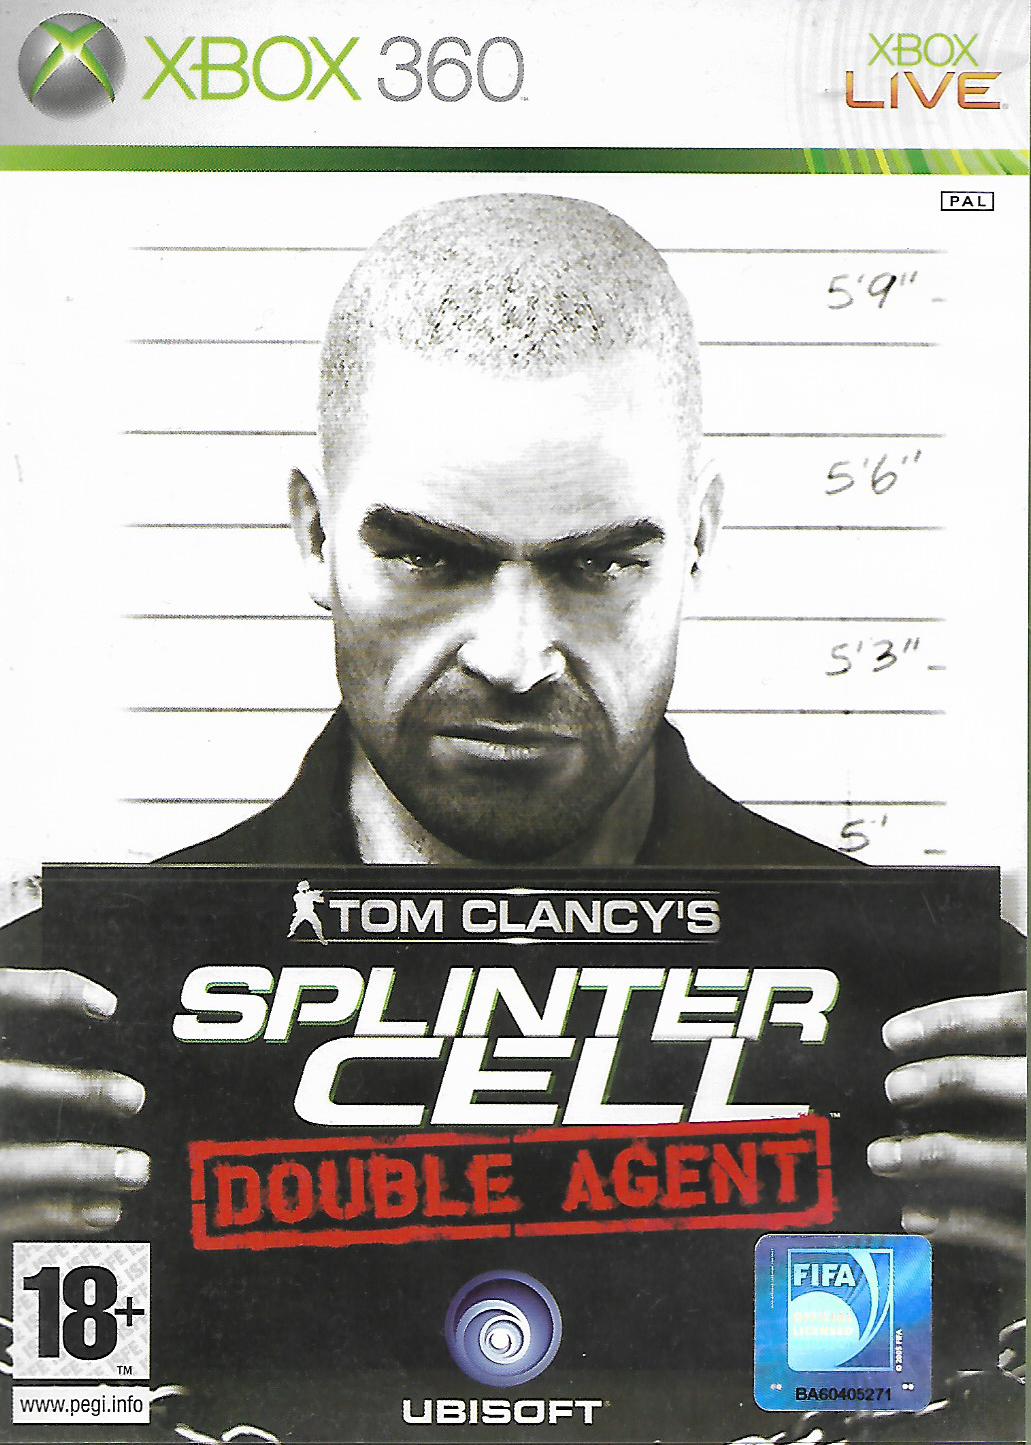 TOM CLANCY'S SPLINTER CELL DOUBLE AGENT (XBOX 360 - bazar)